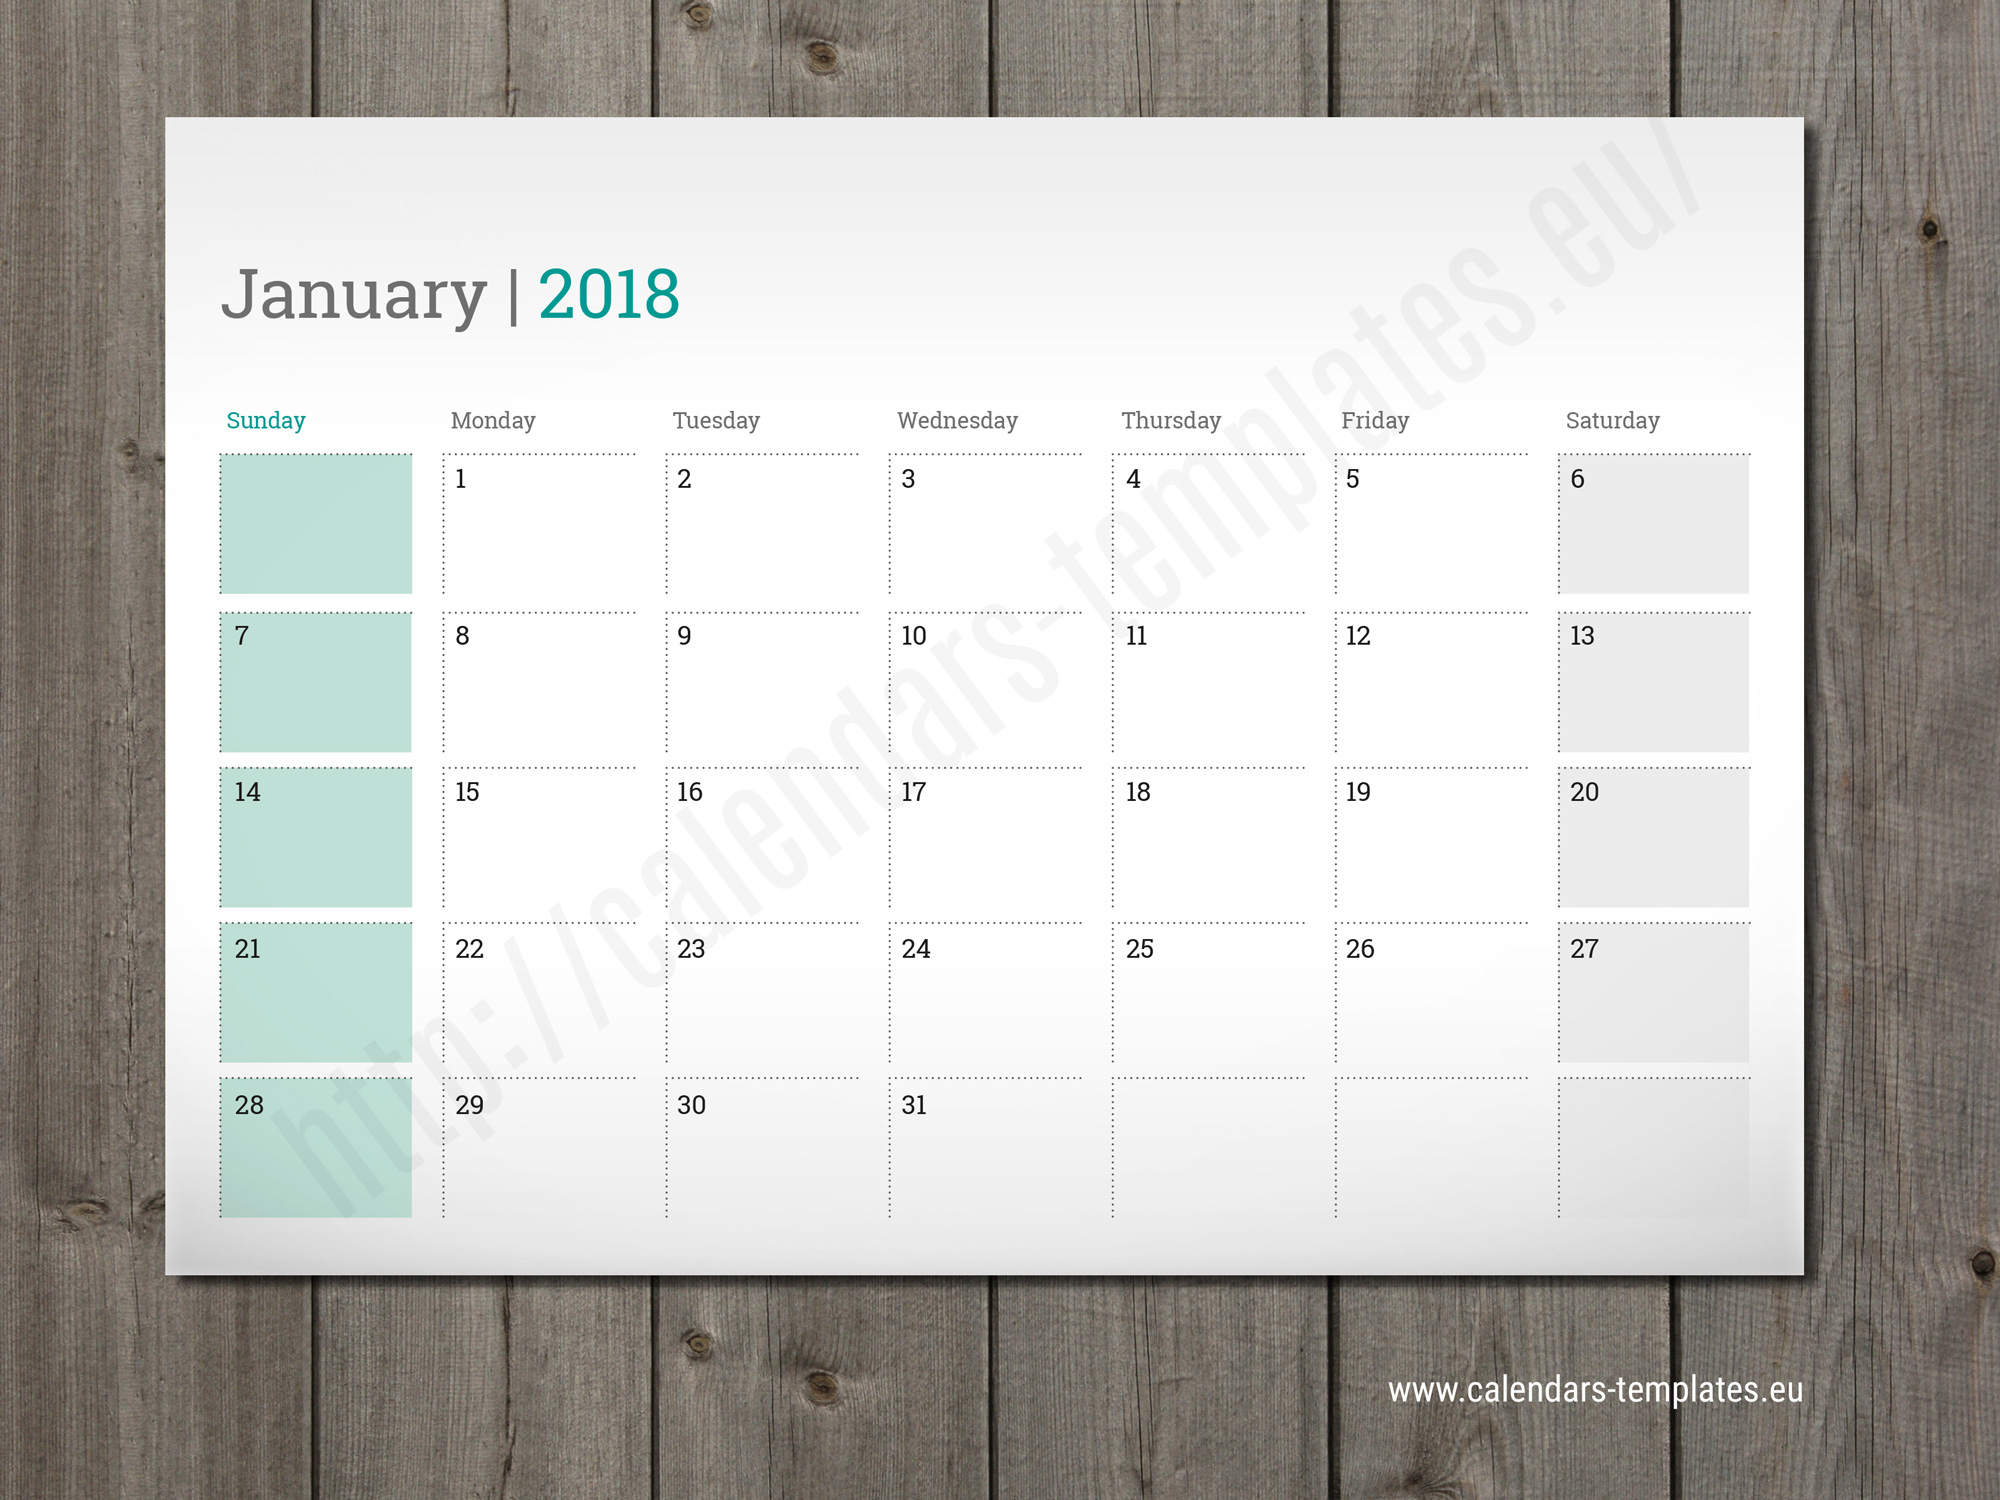 Calendar Template Indesign Free Example Calendar Printable